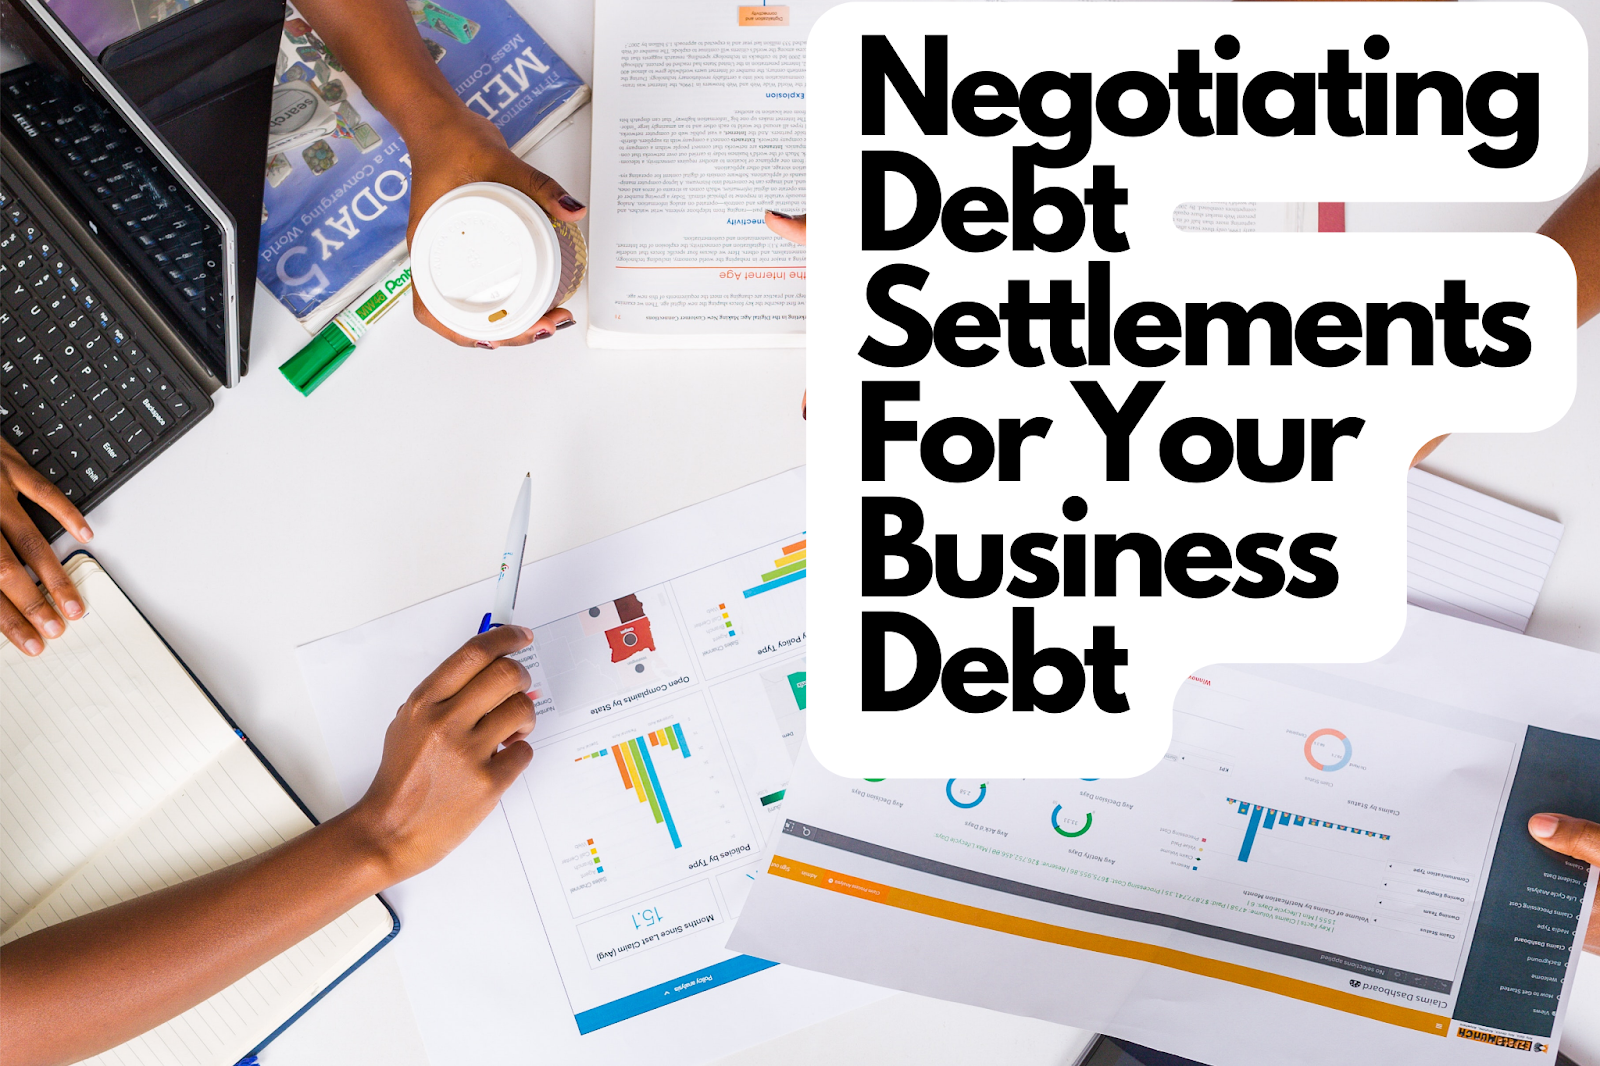 Negotiating Debt Settlements For Your Business Debt